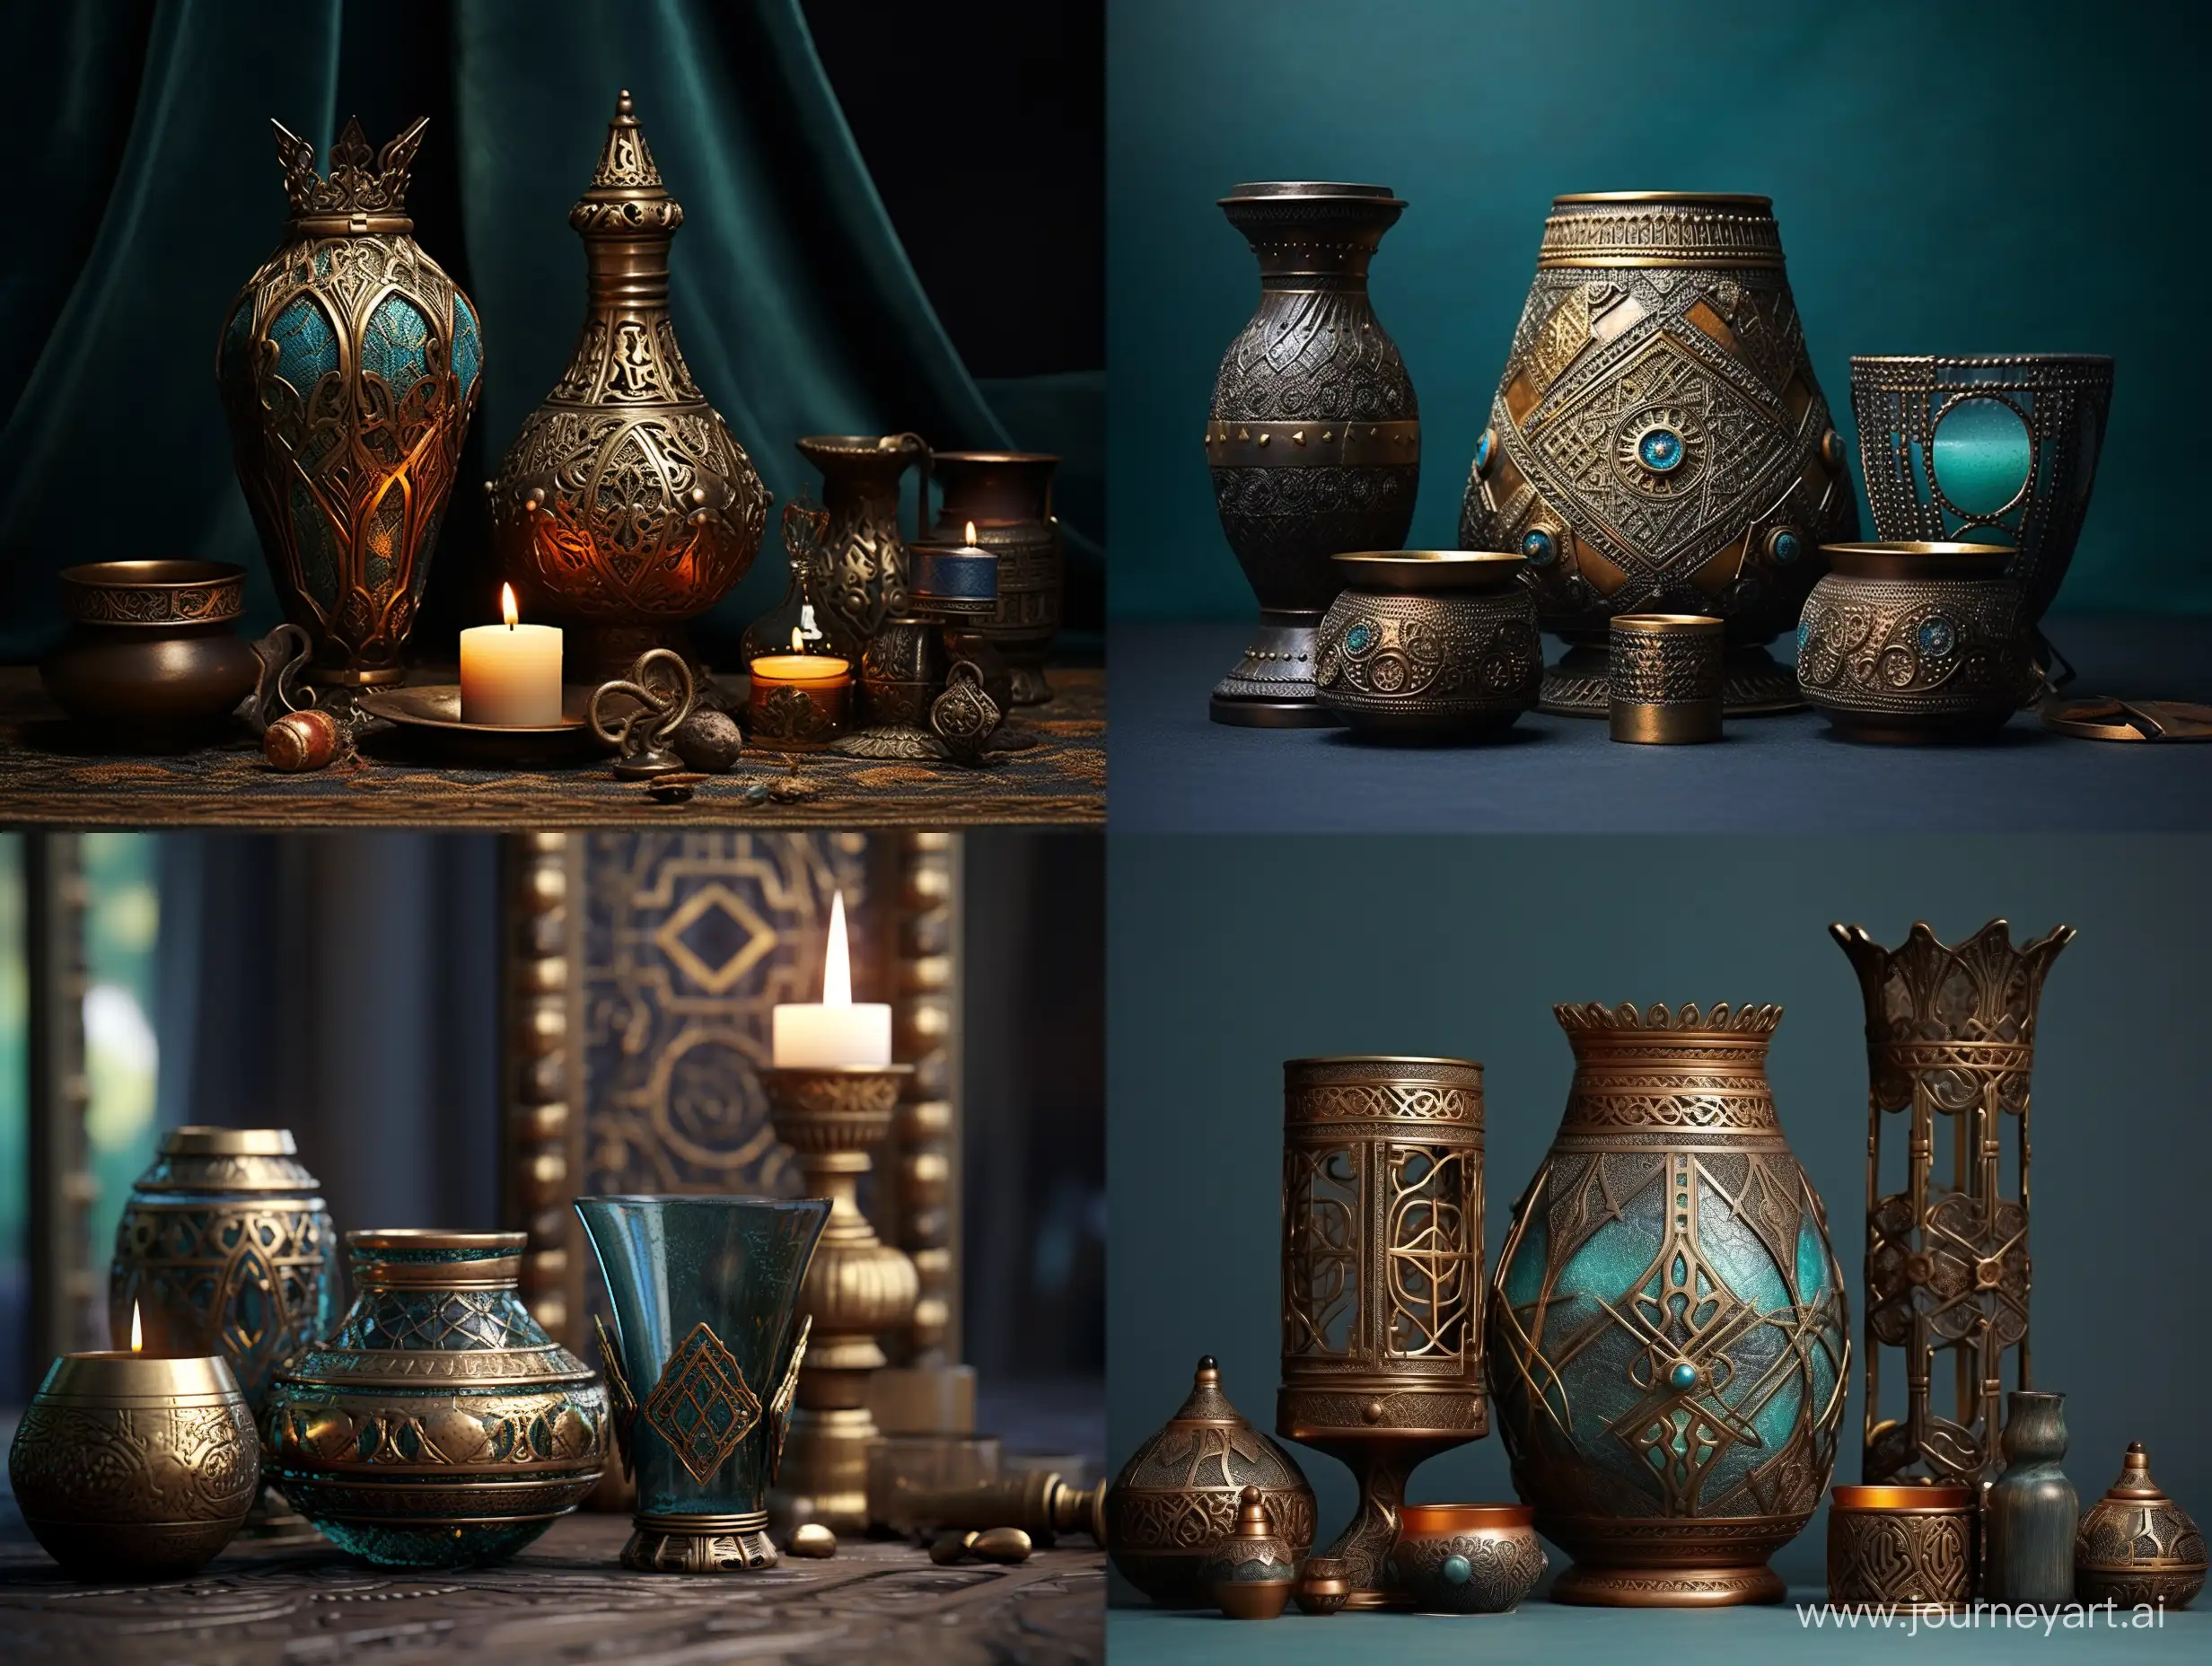 Kazakh-Stylistics-with-Ornate-Bronze-Glass-and-Candle